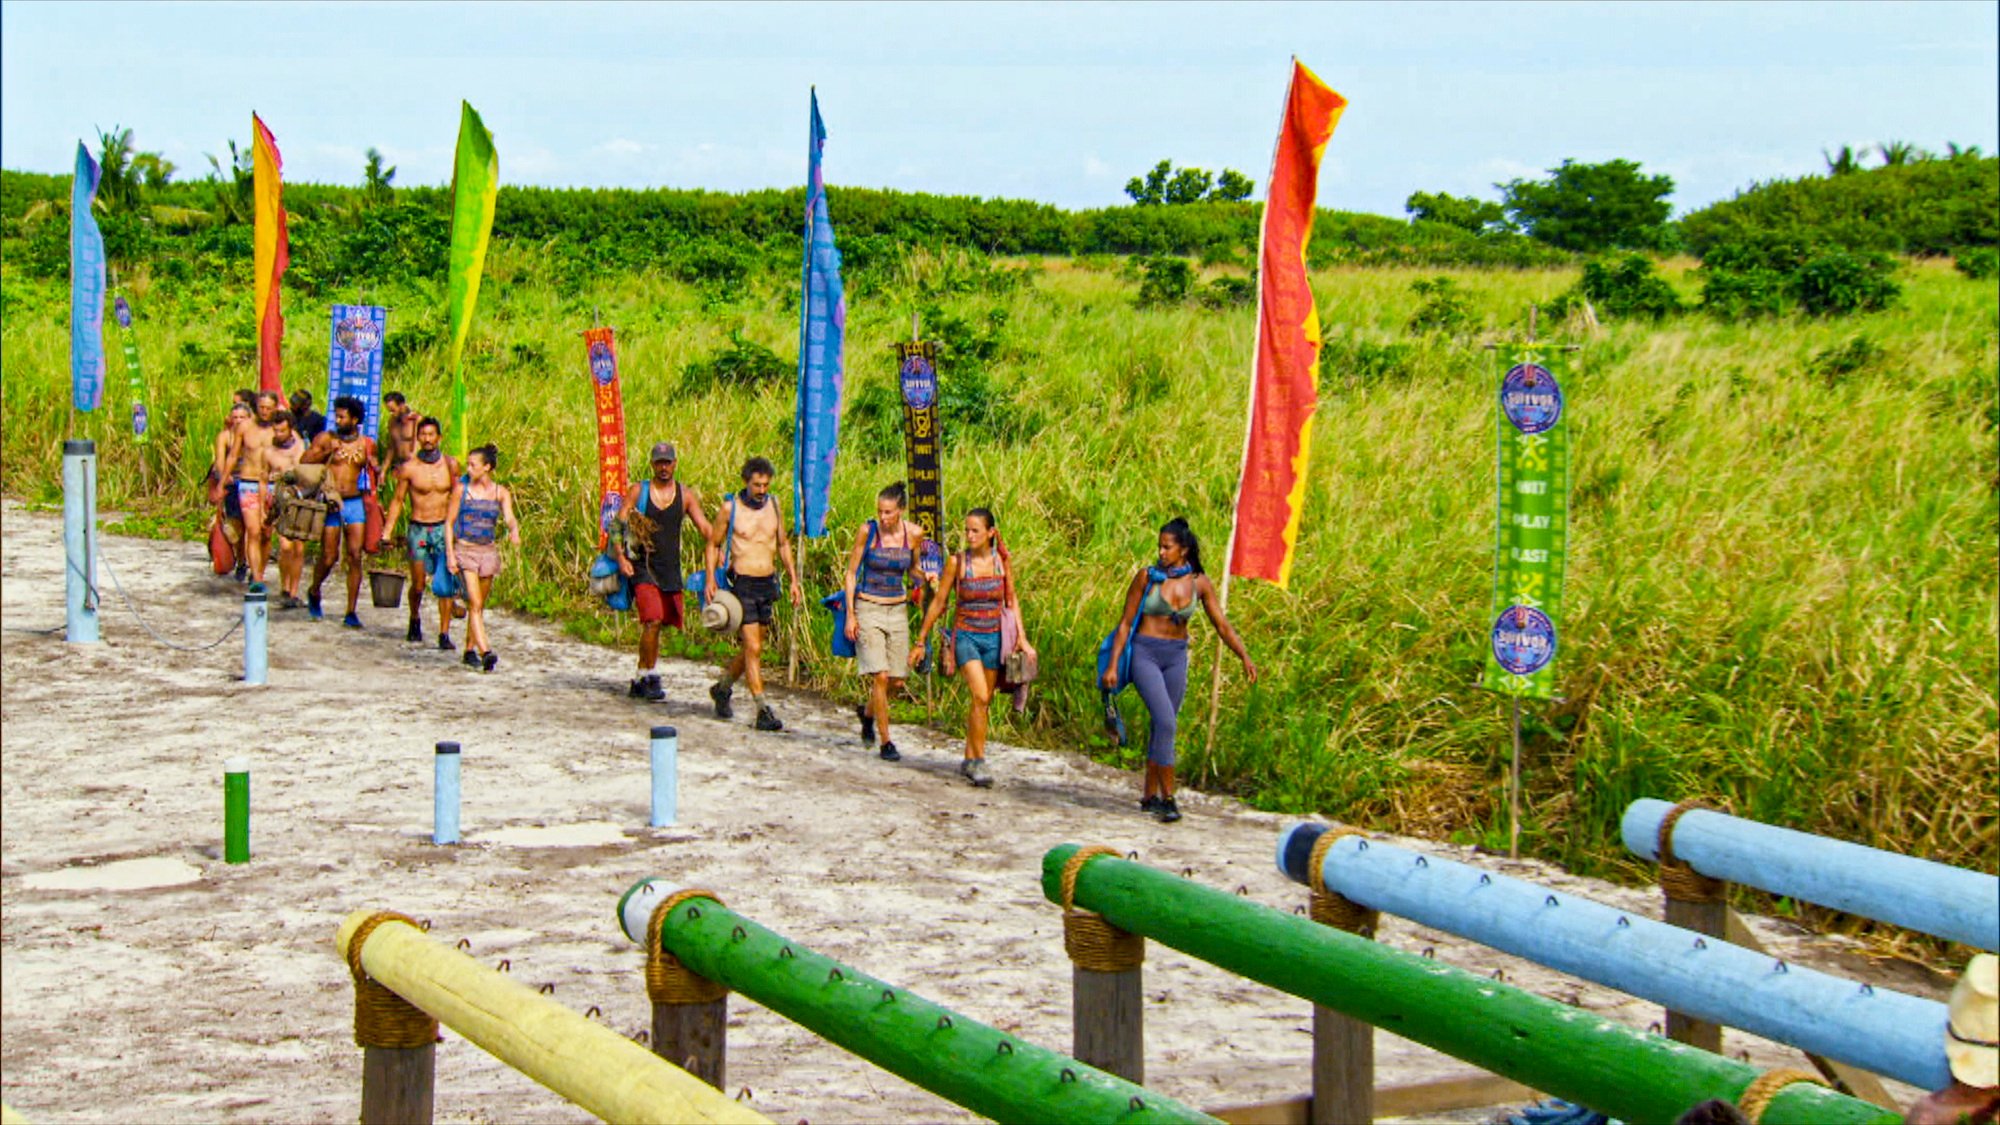 'Survivor' cast members walking into a challenge course